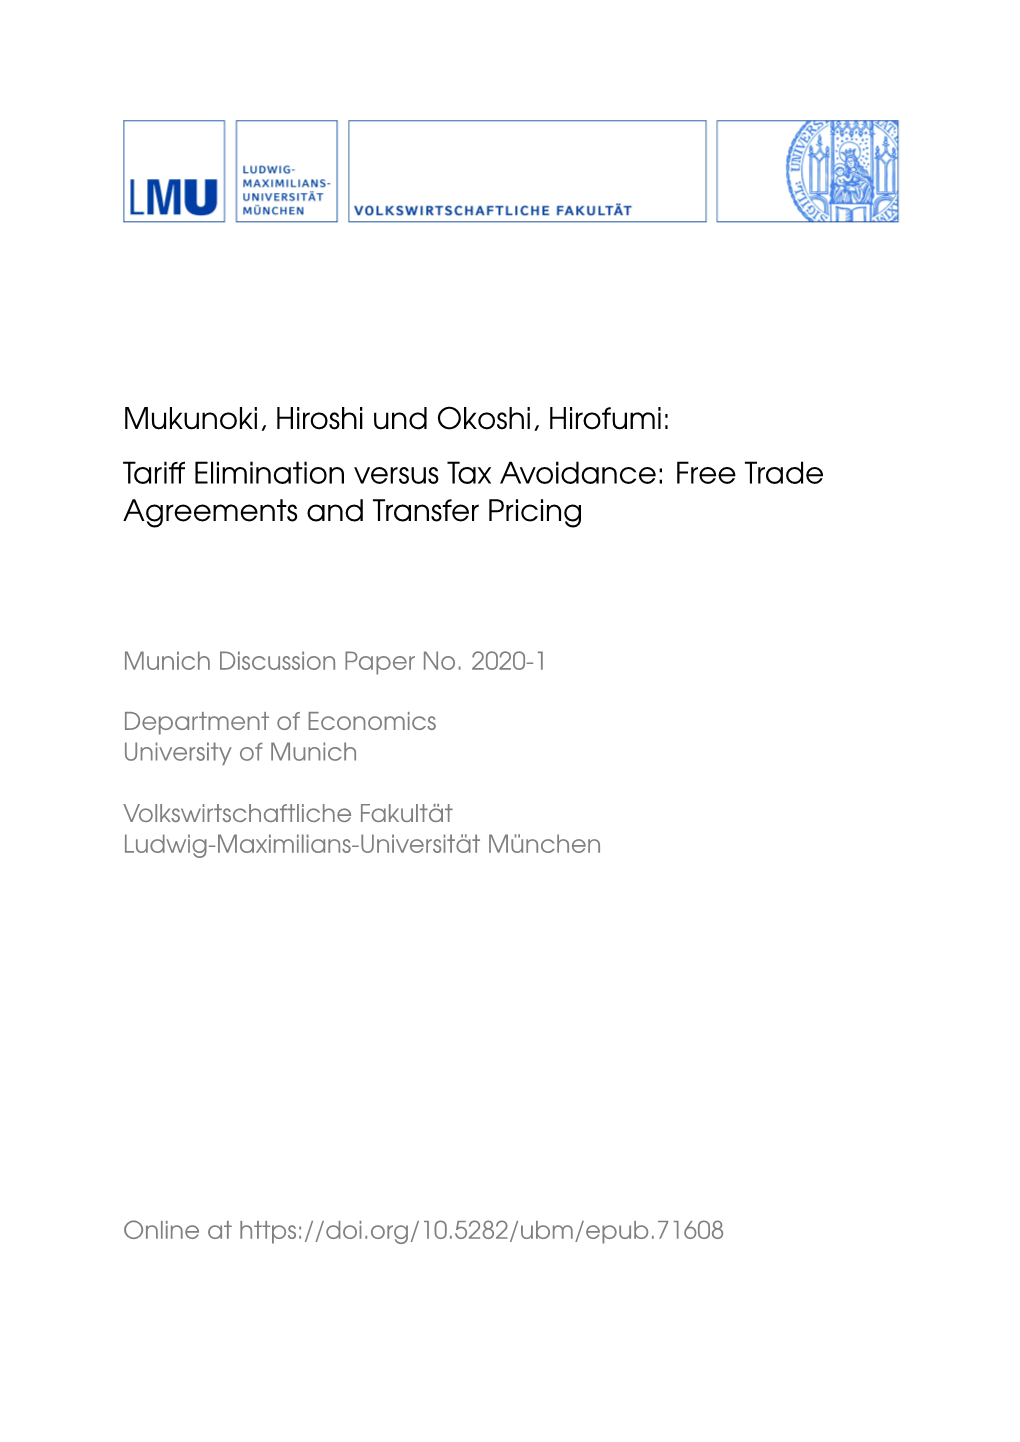 Mukunoki, Hiroshi Und Okoshi, Hirofumi: Tariff Elimination Versus Tax Avoidance: Free Trade Agreements and Transfer Pricing